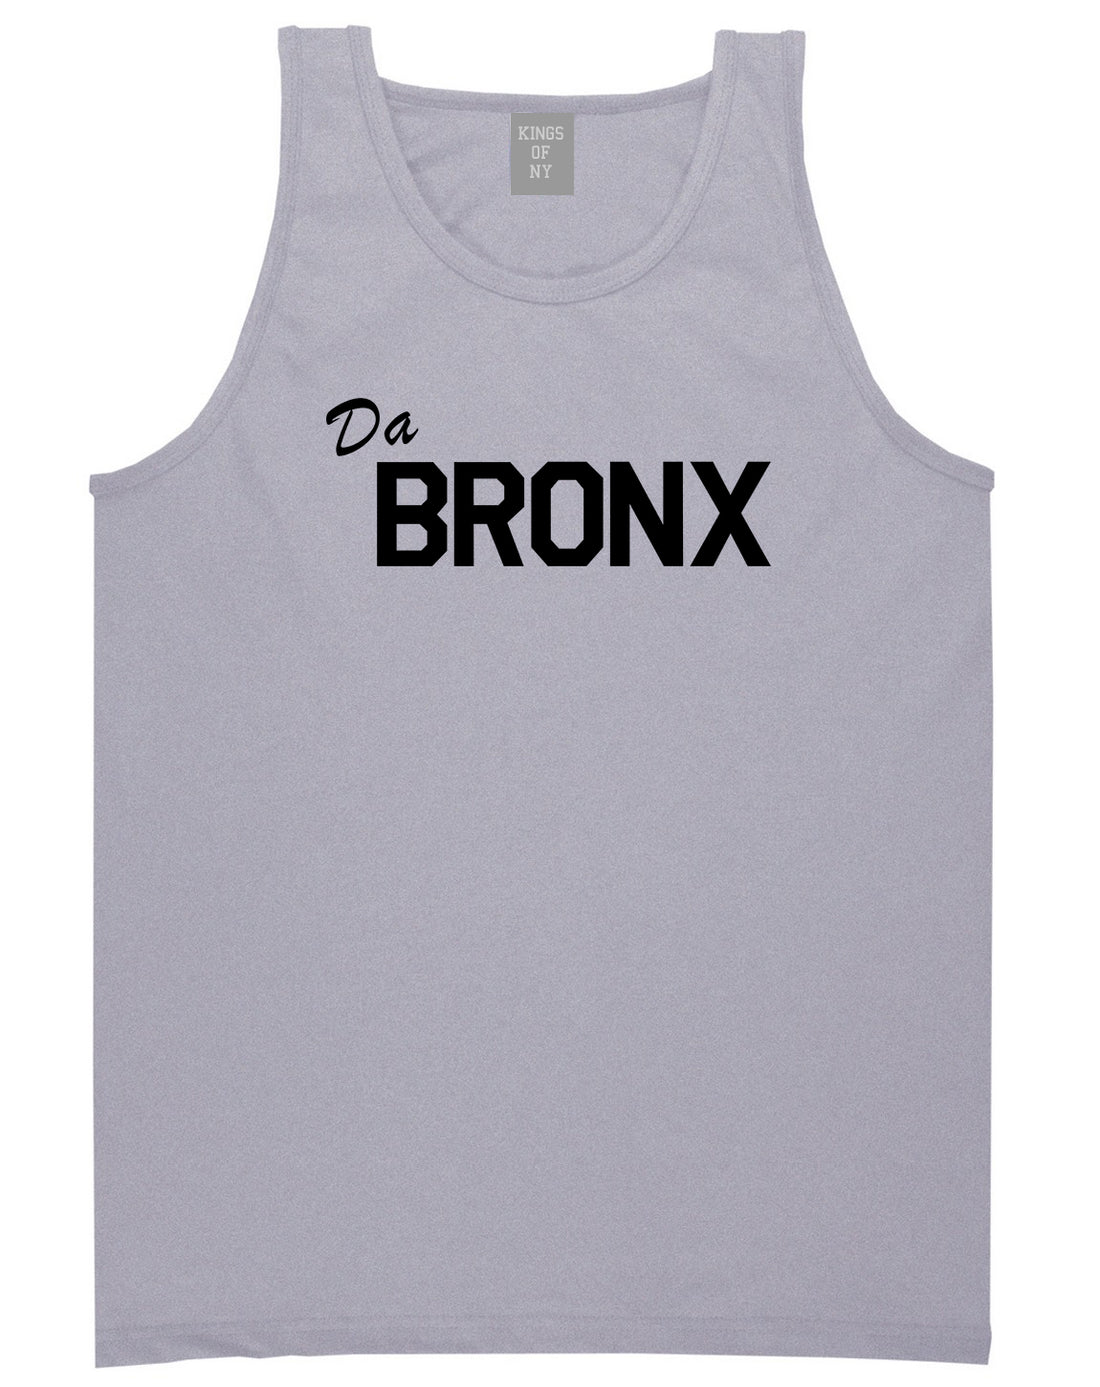 Da Bronx Mens Tank Top Shirt Grey by Kings Of NY